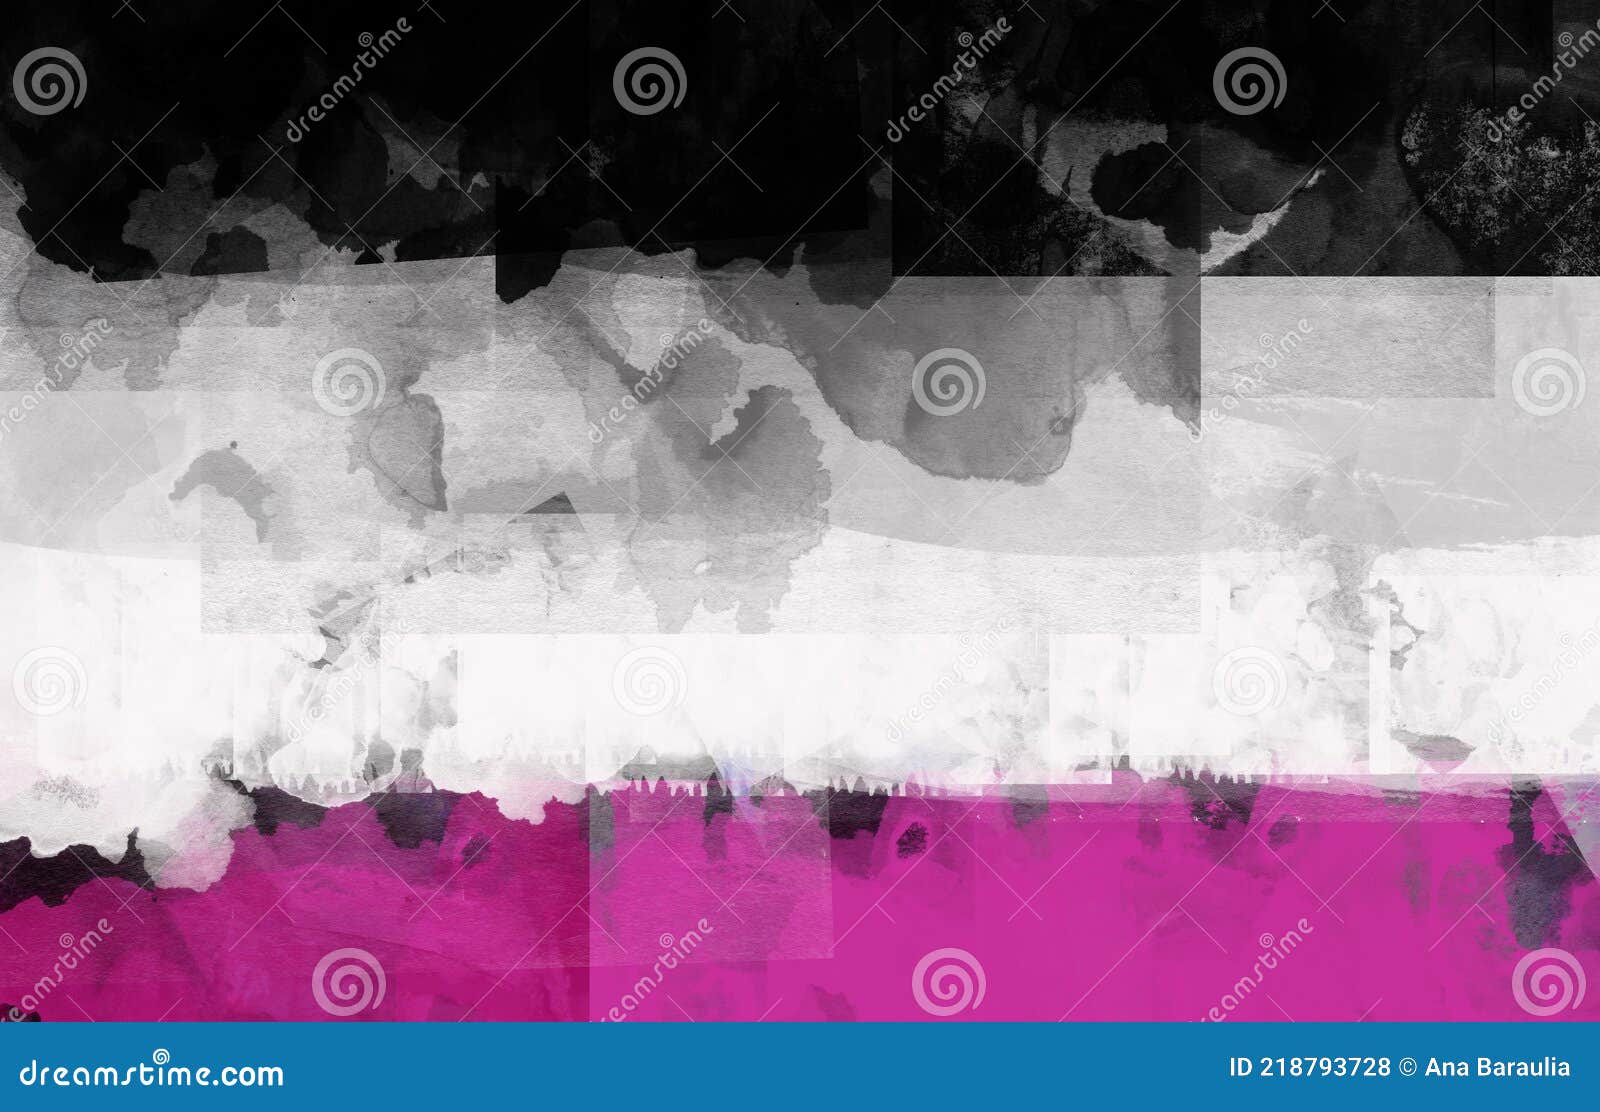 Subtle Asexual Flag Wallpaper D by itstimetocri on DeviantArt